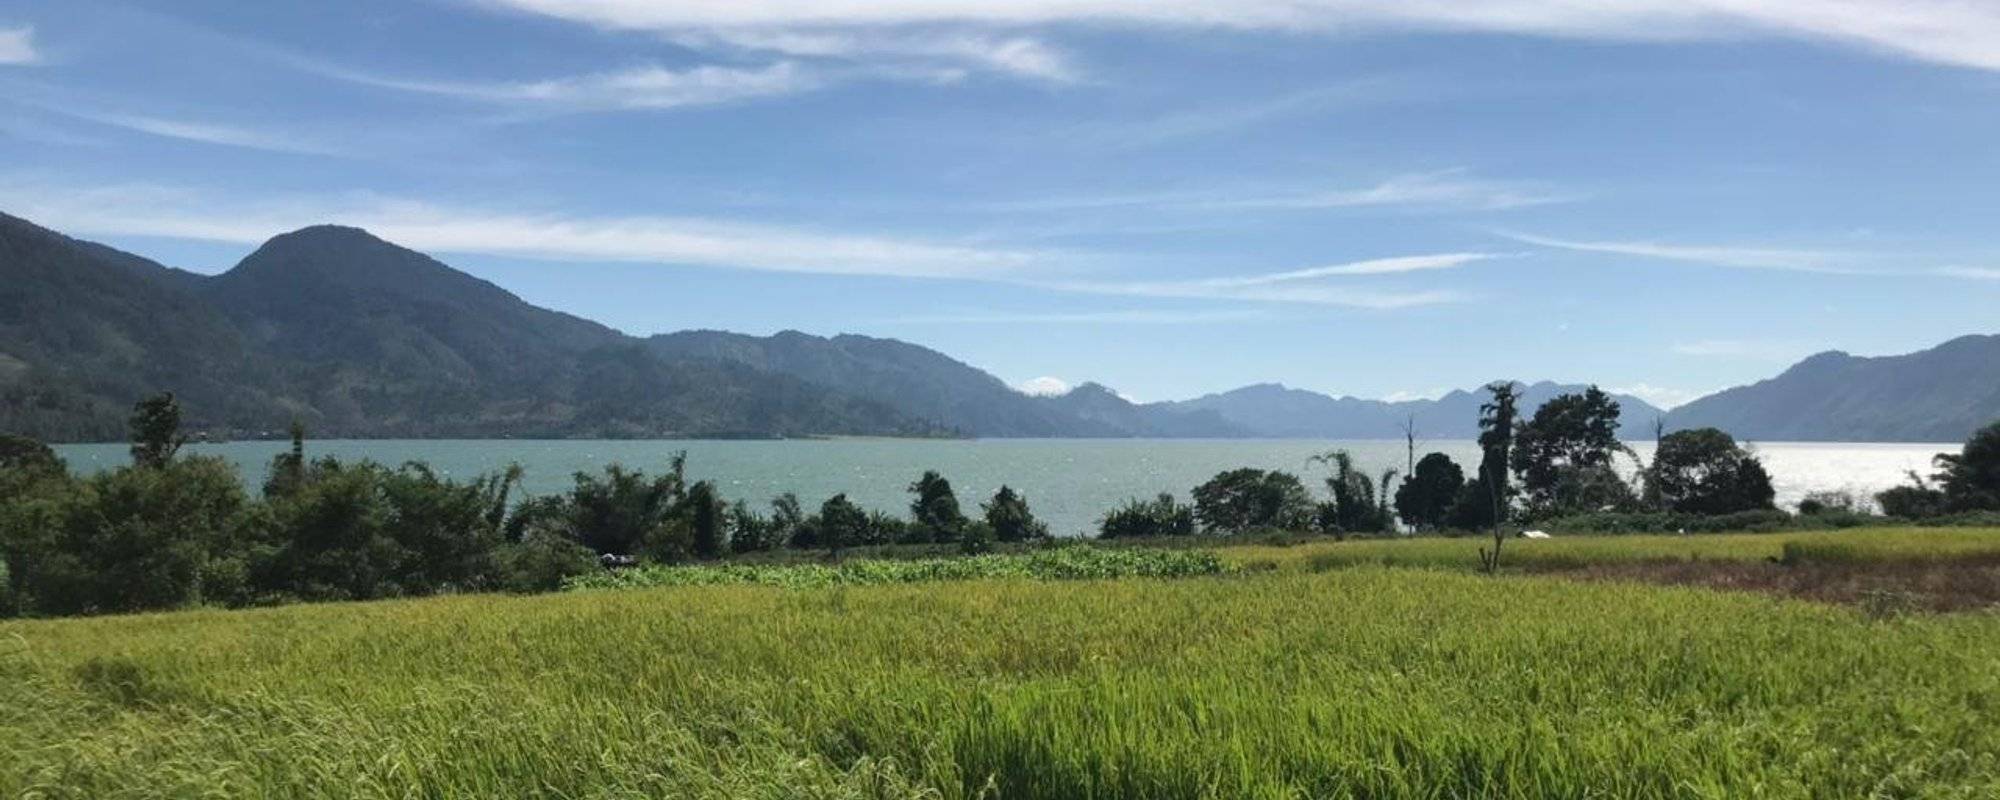 Our Visit to Bintang, Beautiful Village on The Side of Lake Laut Tawar